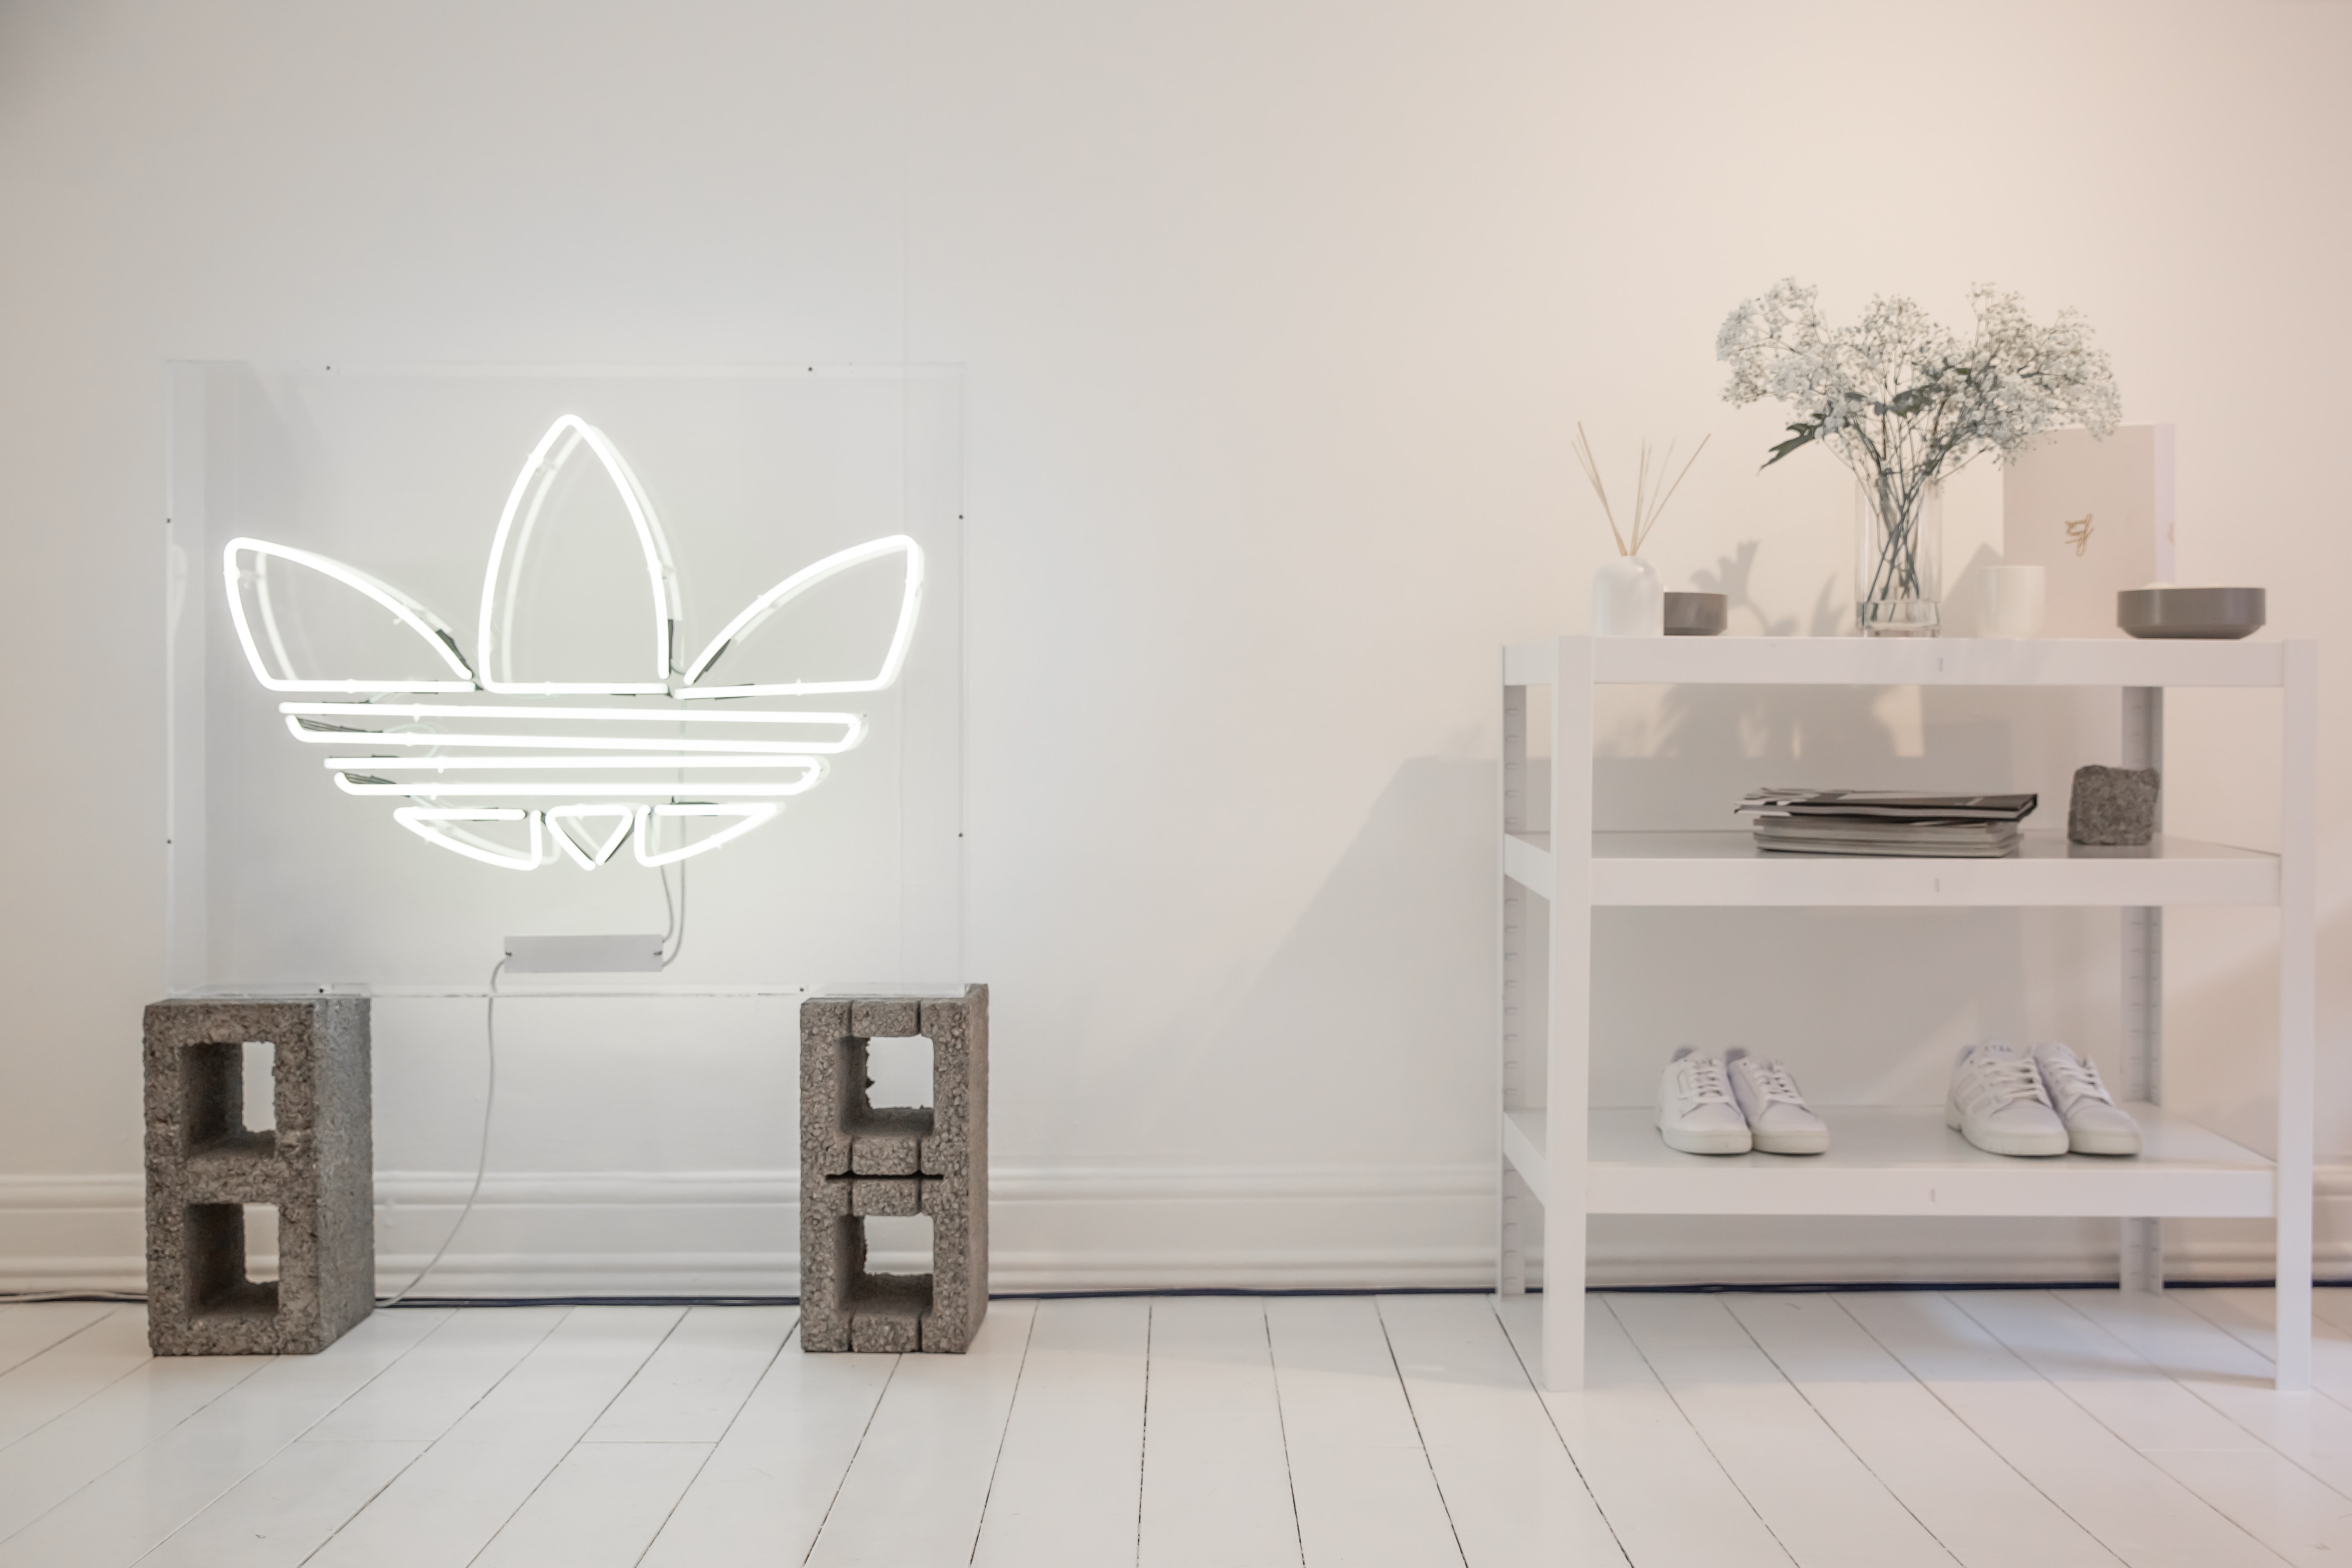 Adidas logo in room